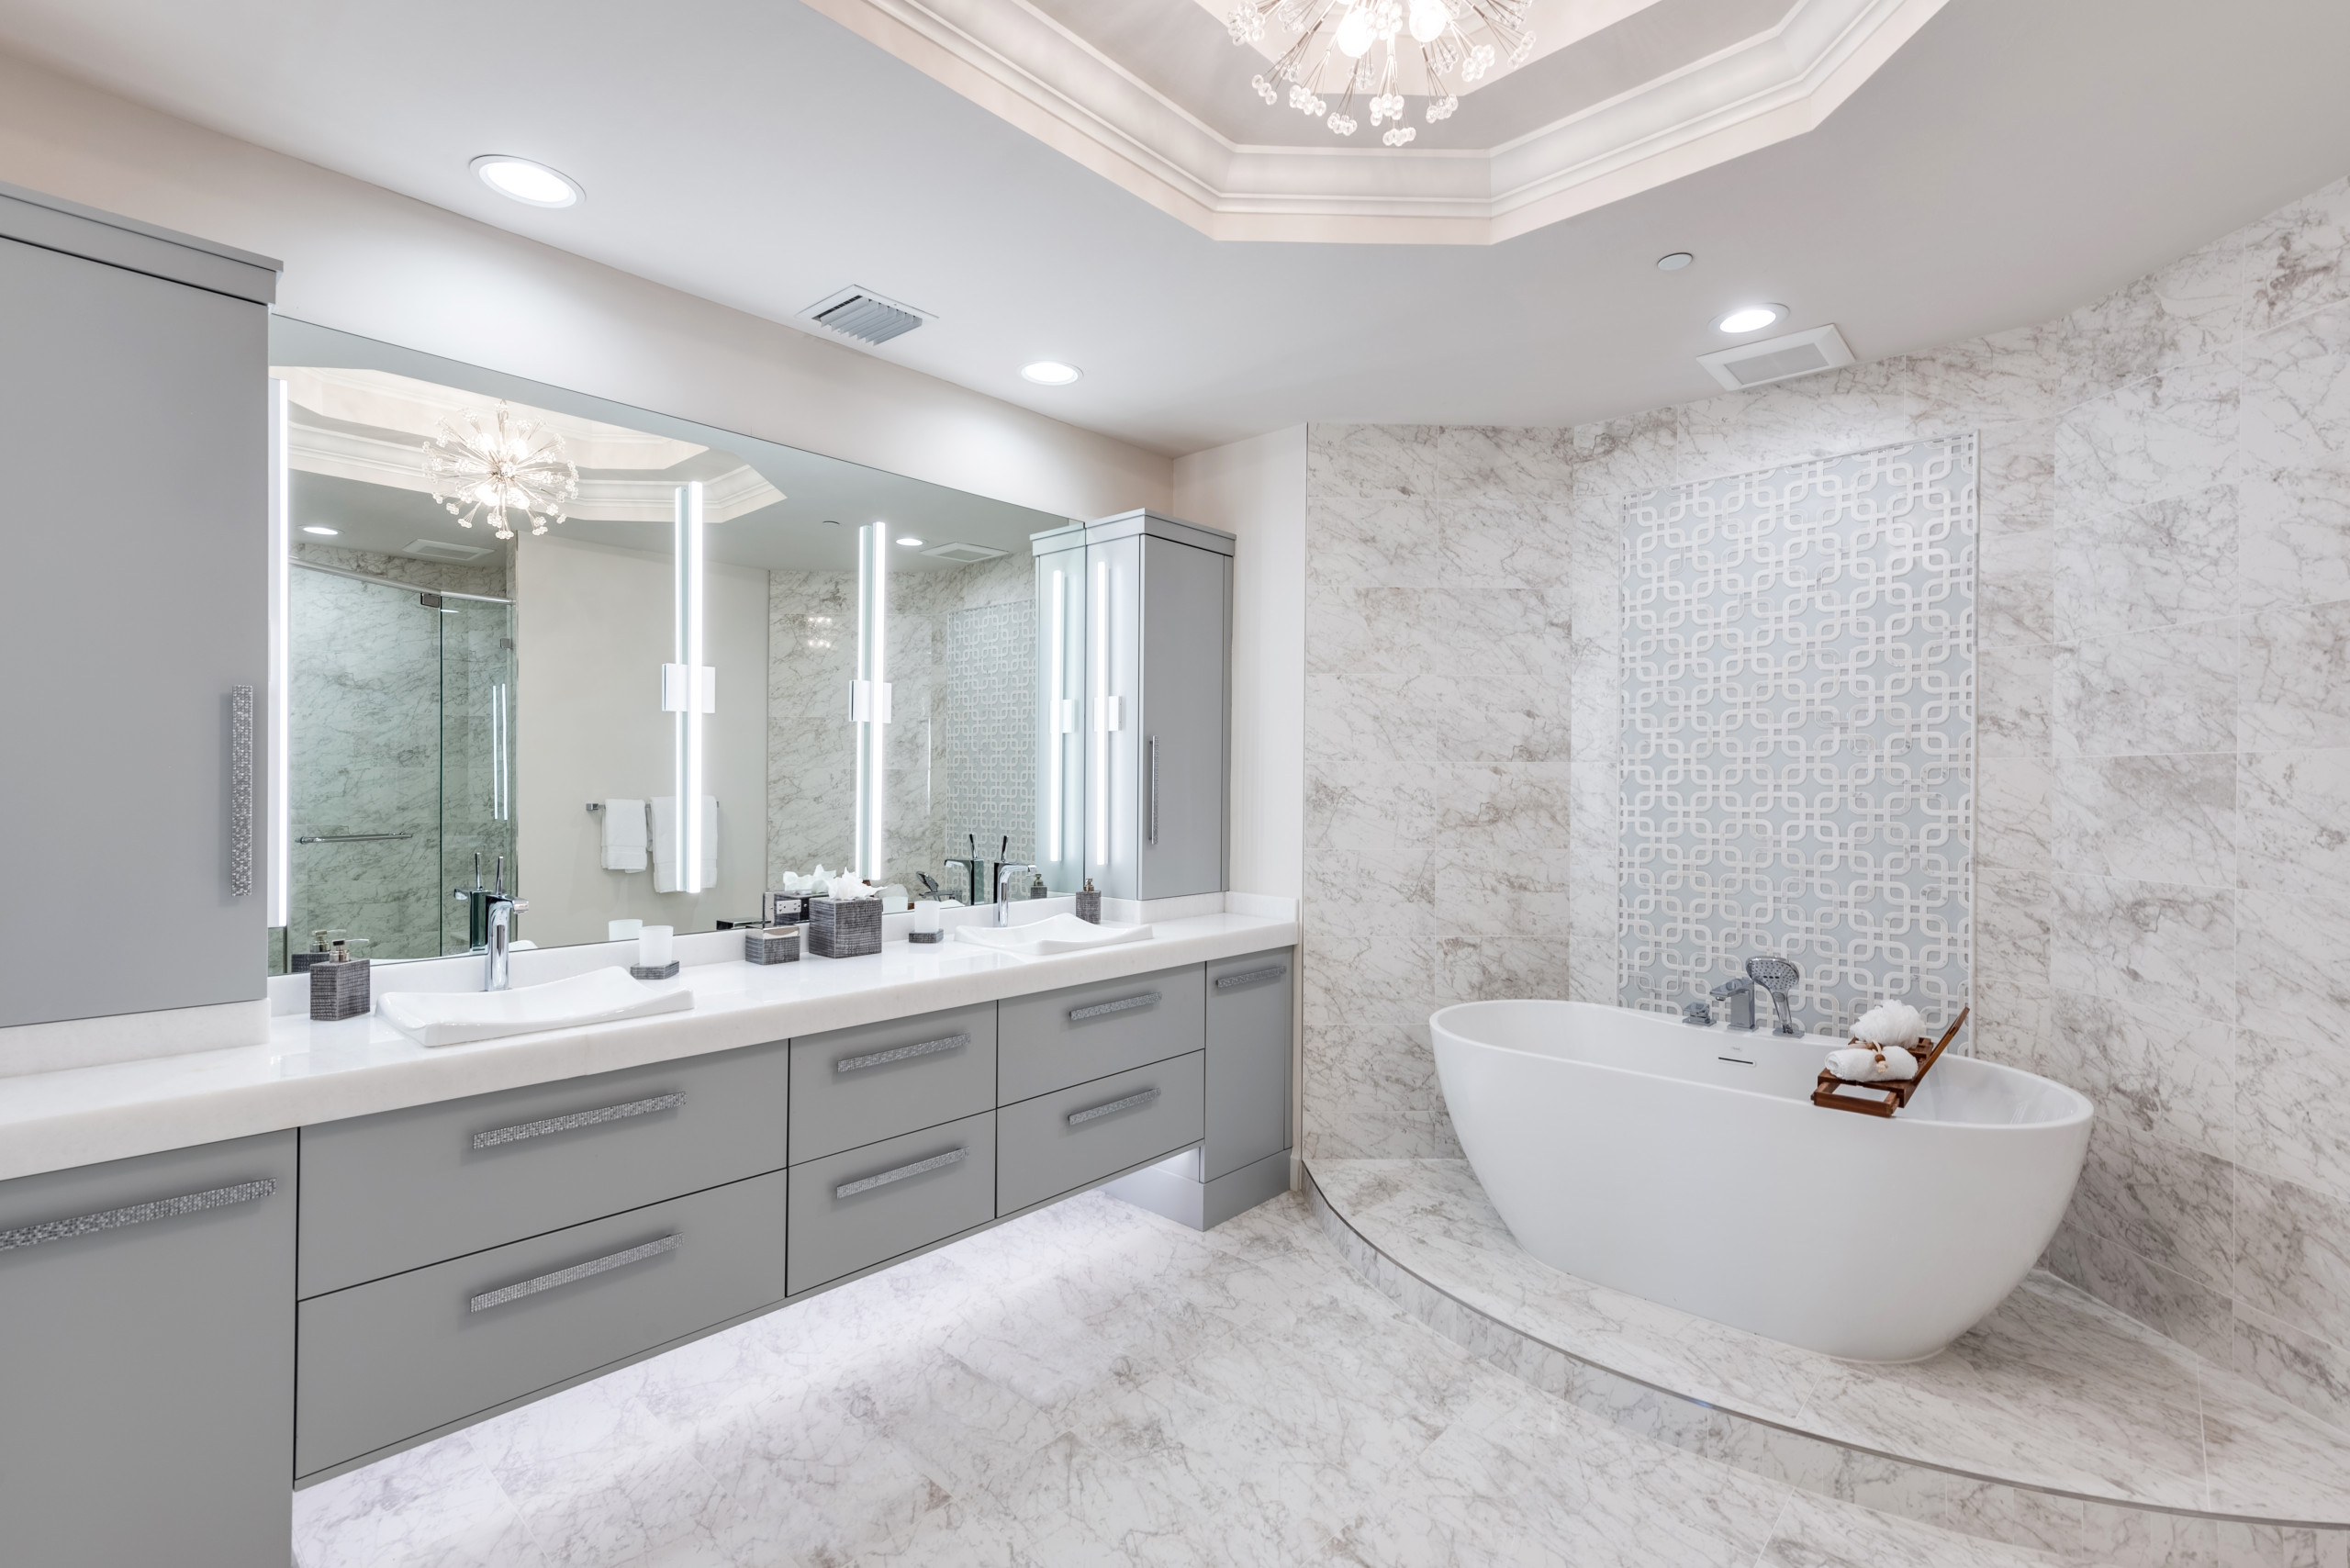 75 Beautiful Double Sink Bathroom, Double Vanity Bathroom Designs